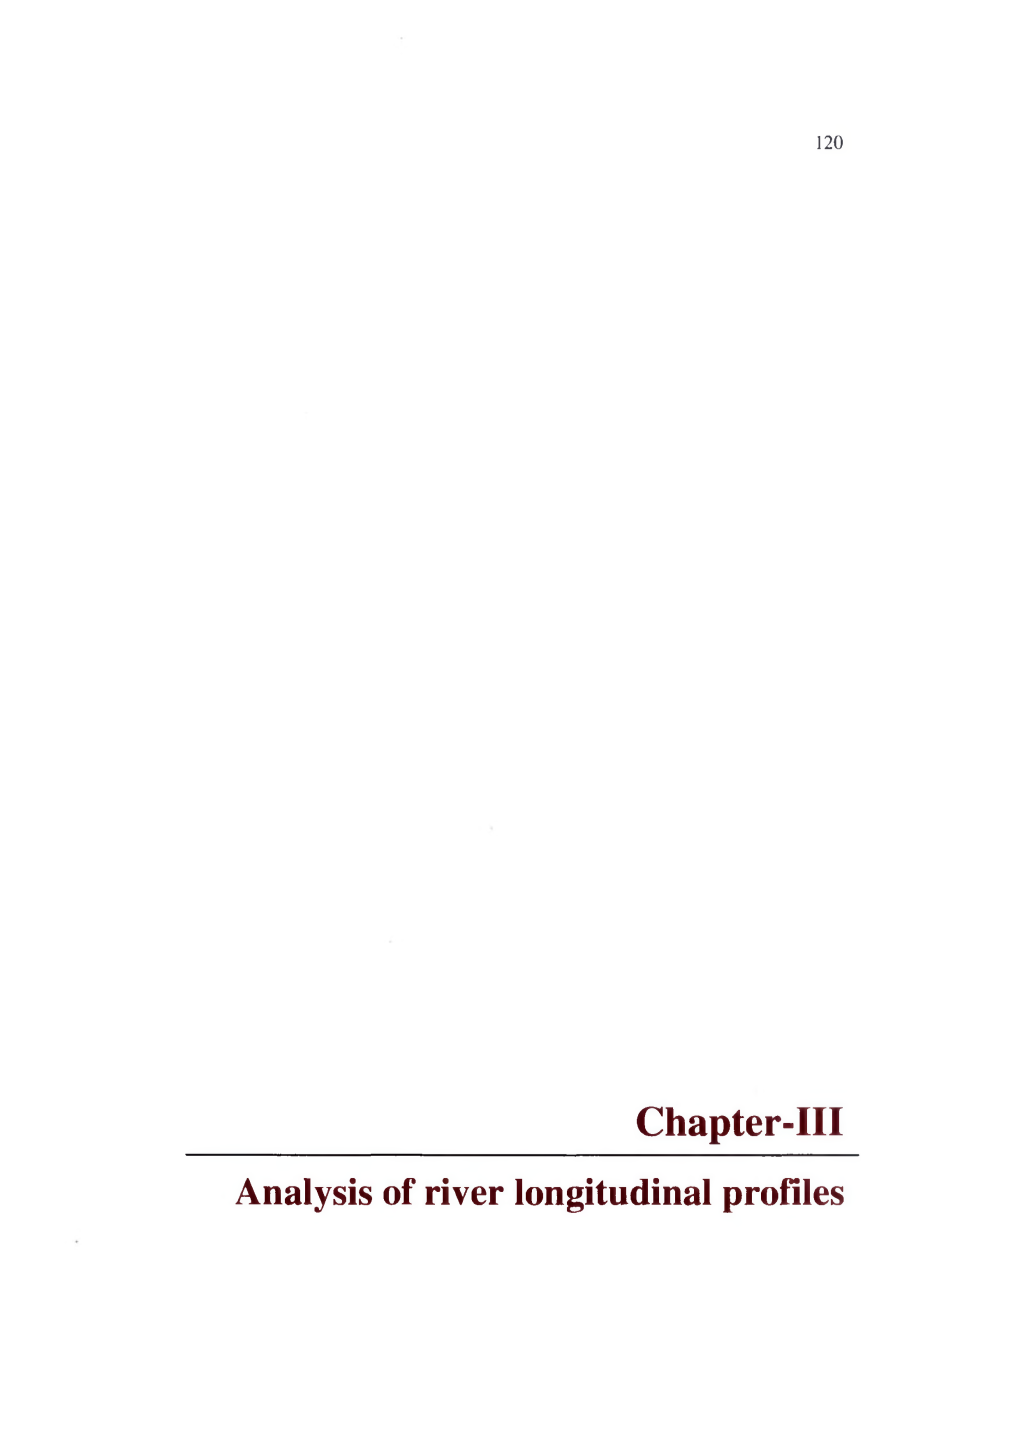 Chapter-Ill Analysis of River Longitudinal Profiles 121